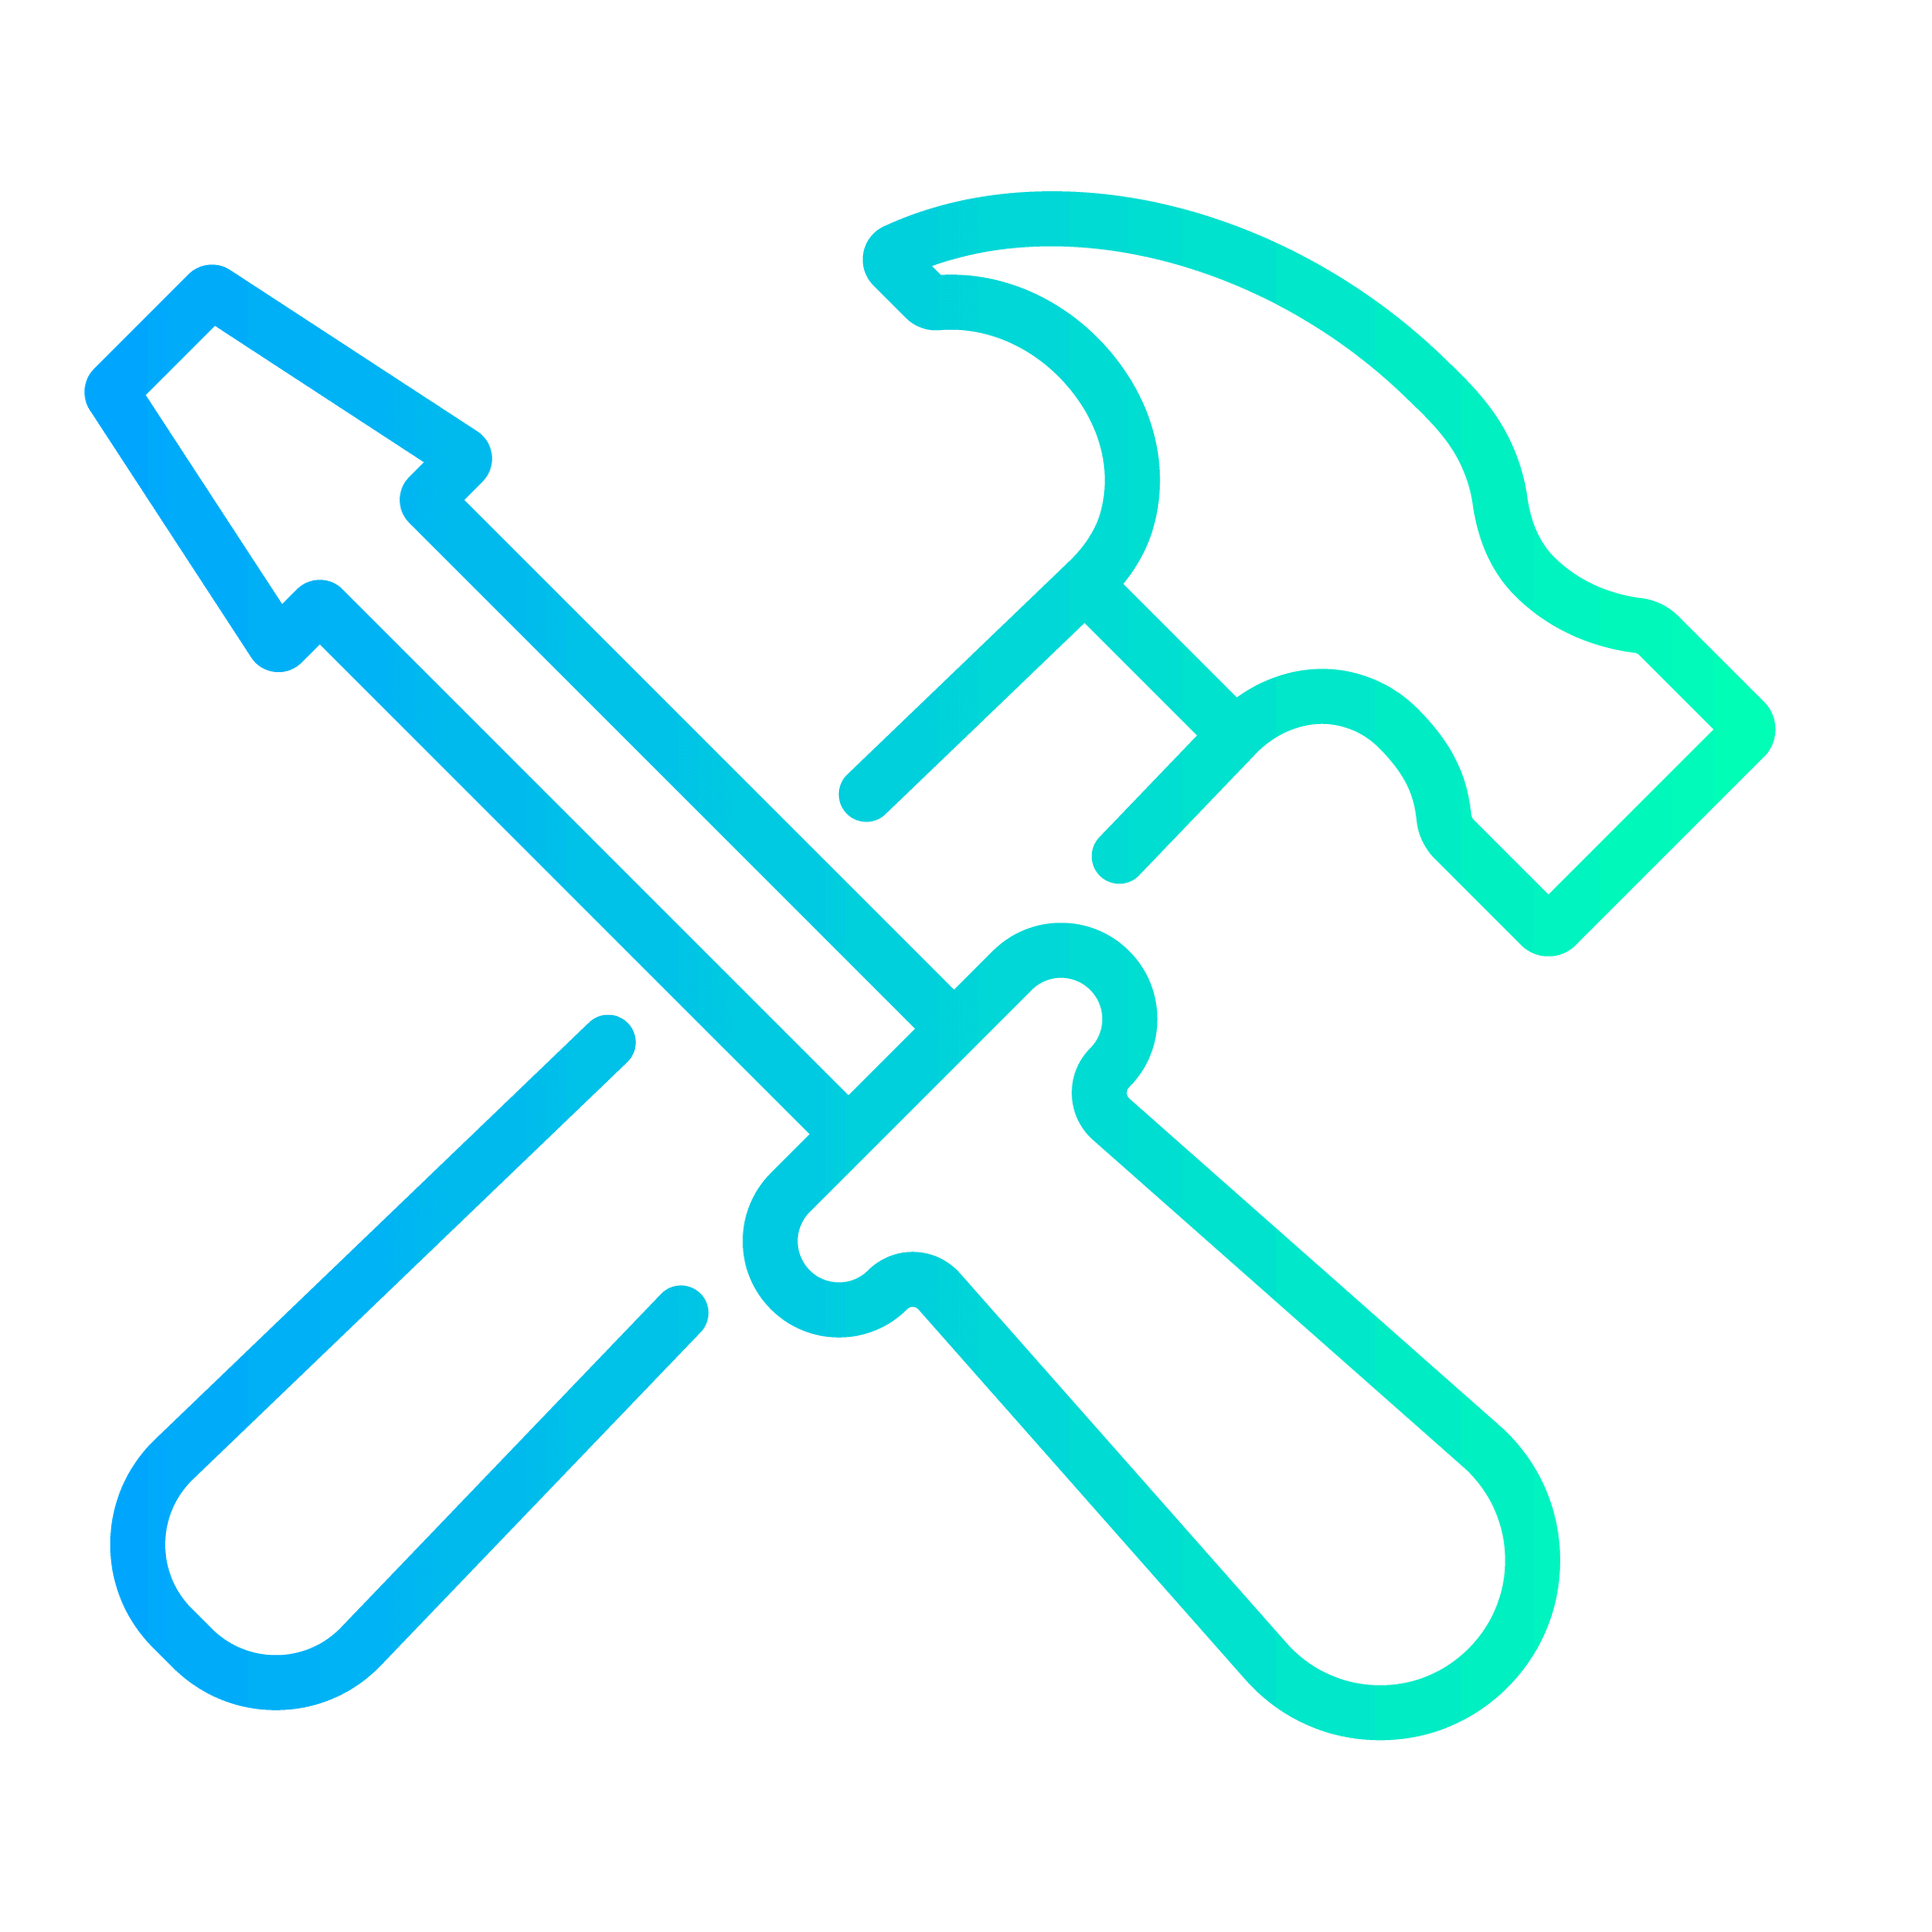 E-Flux - Icon-Tools-Blue Green-Gradient